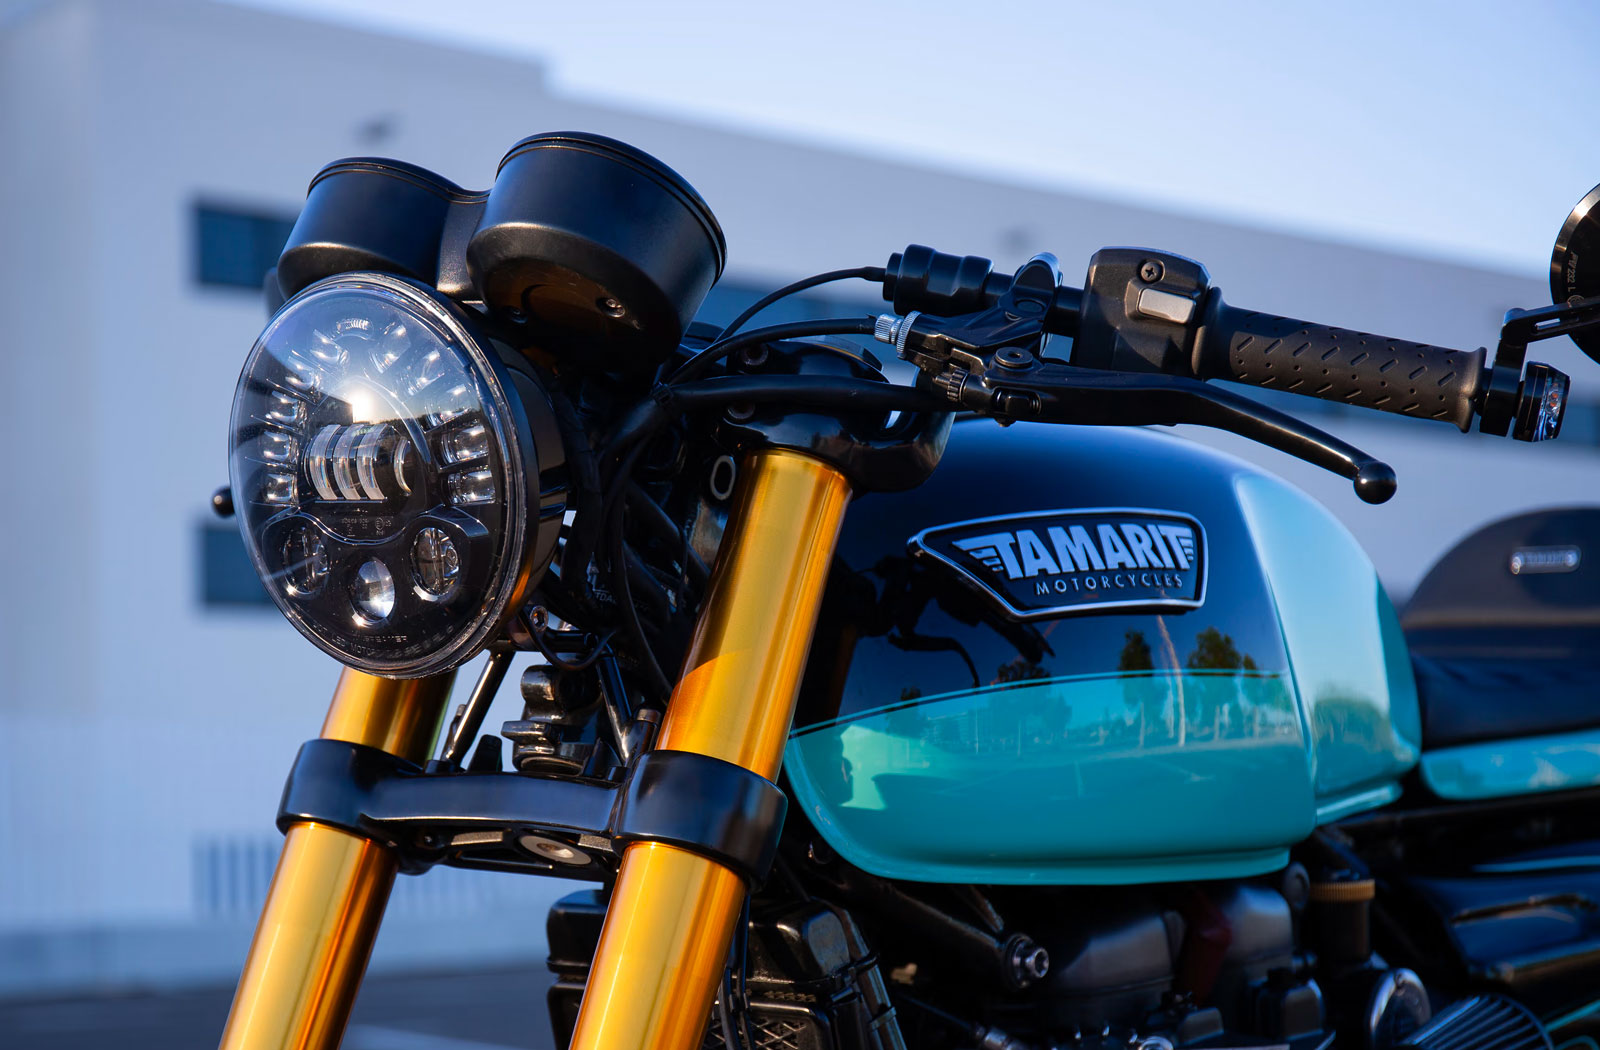 Tamarit Motorcycles custom Triumph Thruxton R